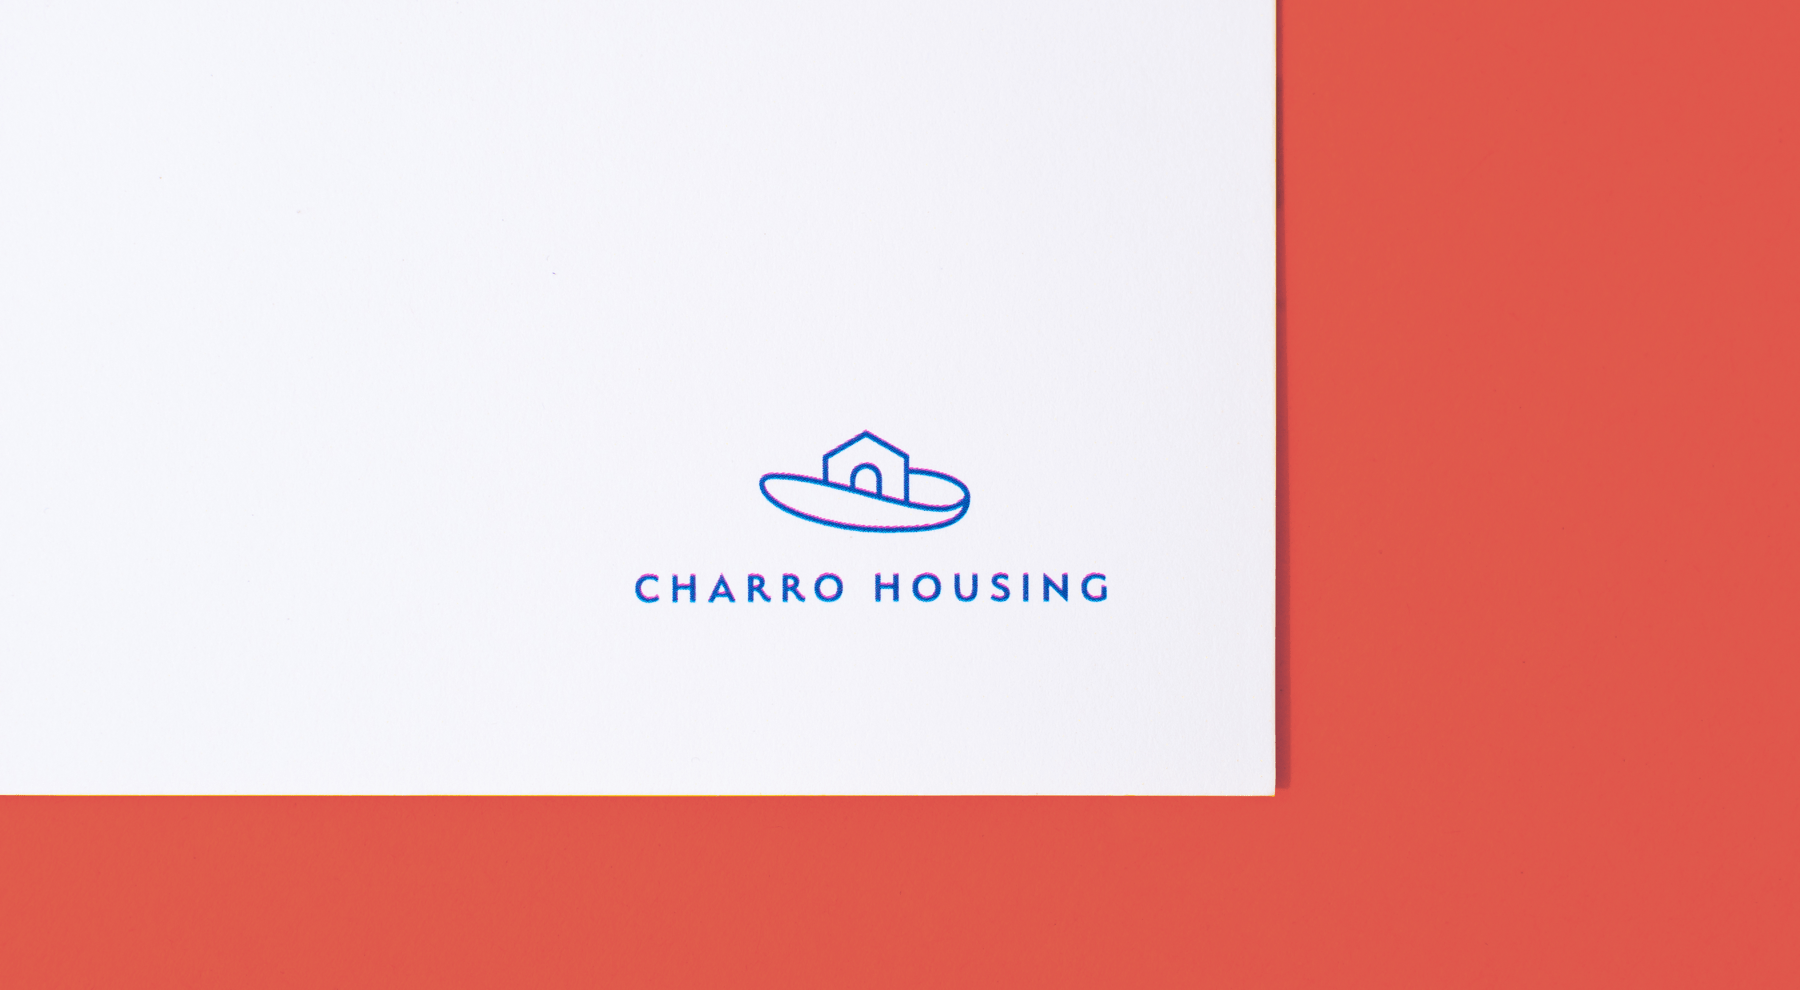 Charro Housing branding - logo detail